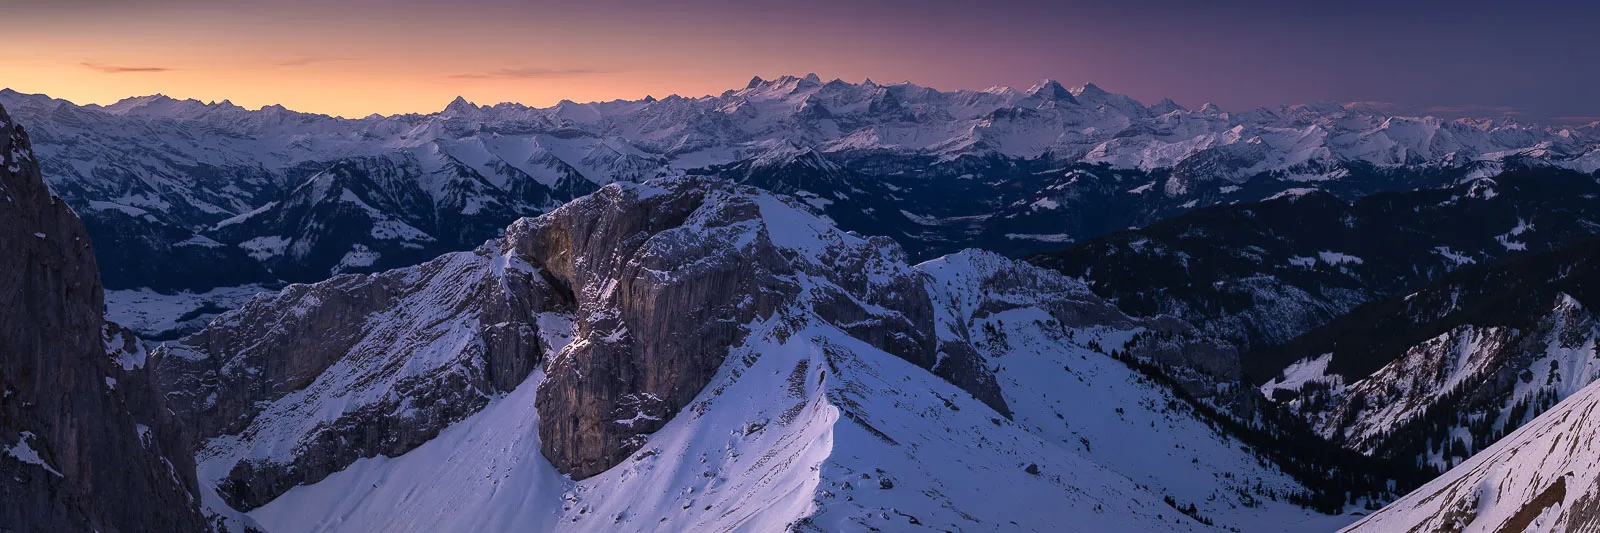 Panorama of Swiss Alps taken from Mt. Pilatus